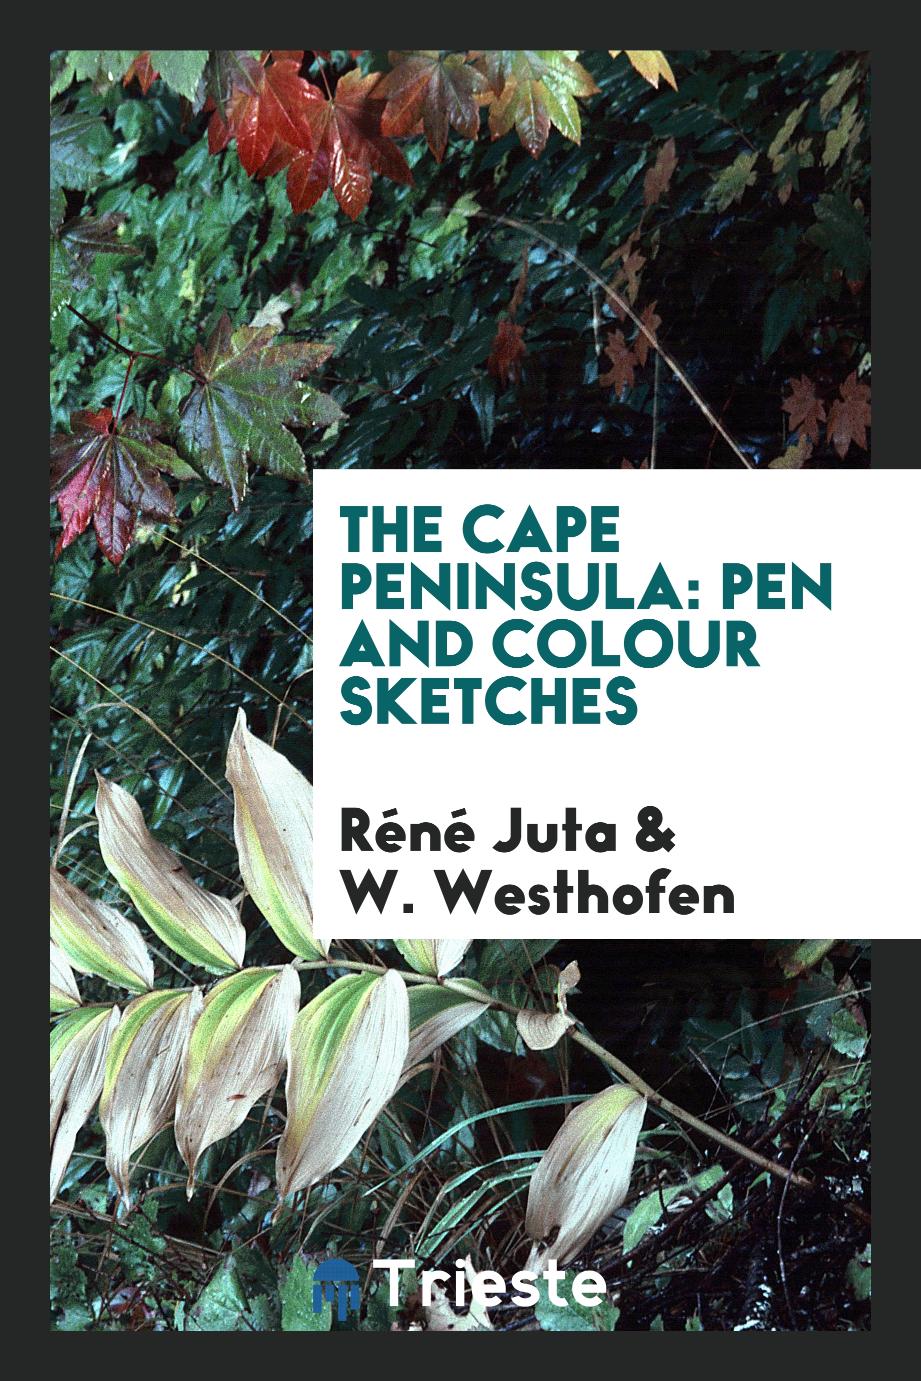 The Cape peninsula: pen and colour sketches